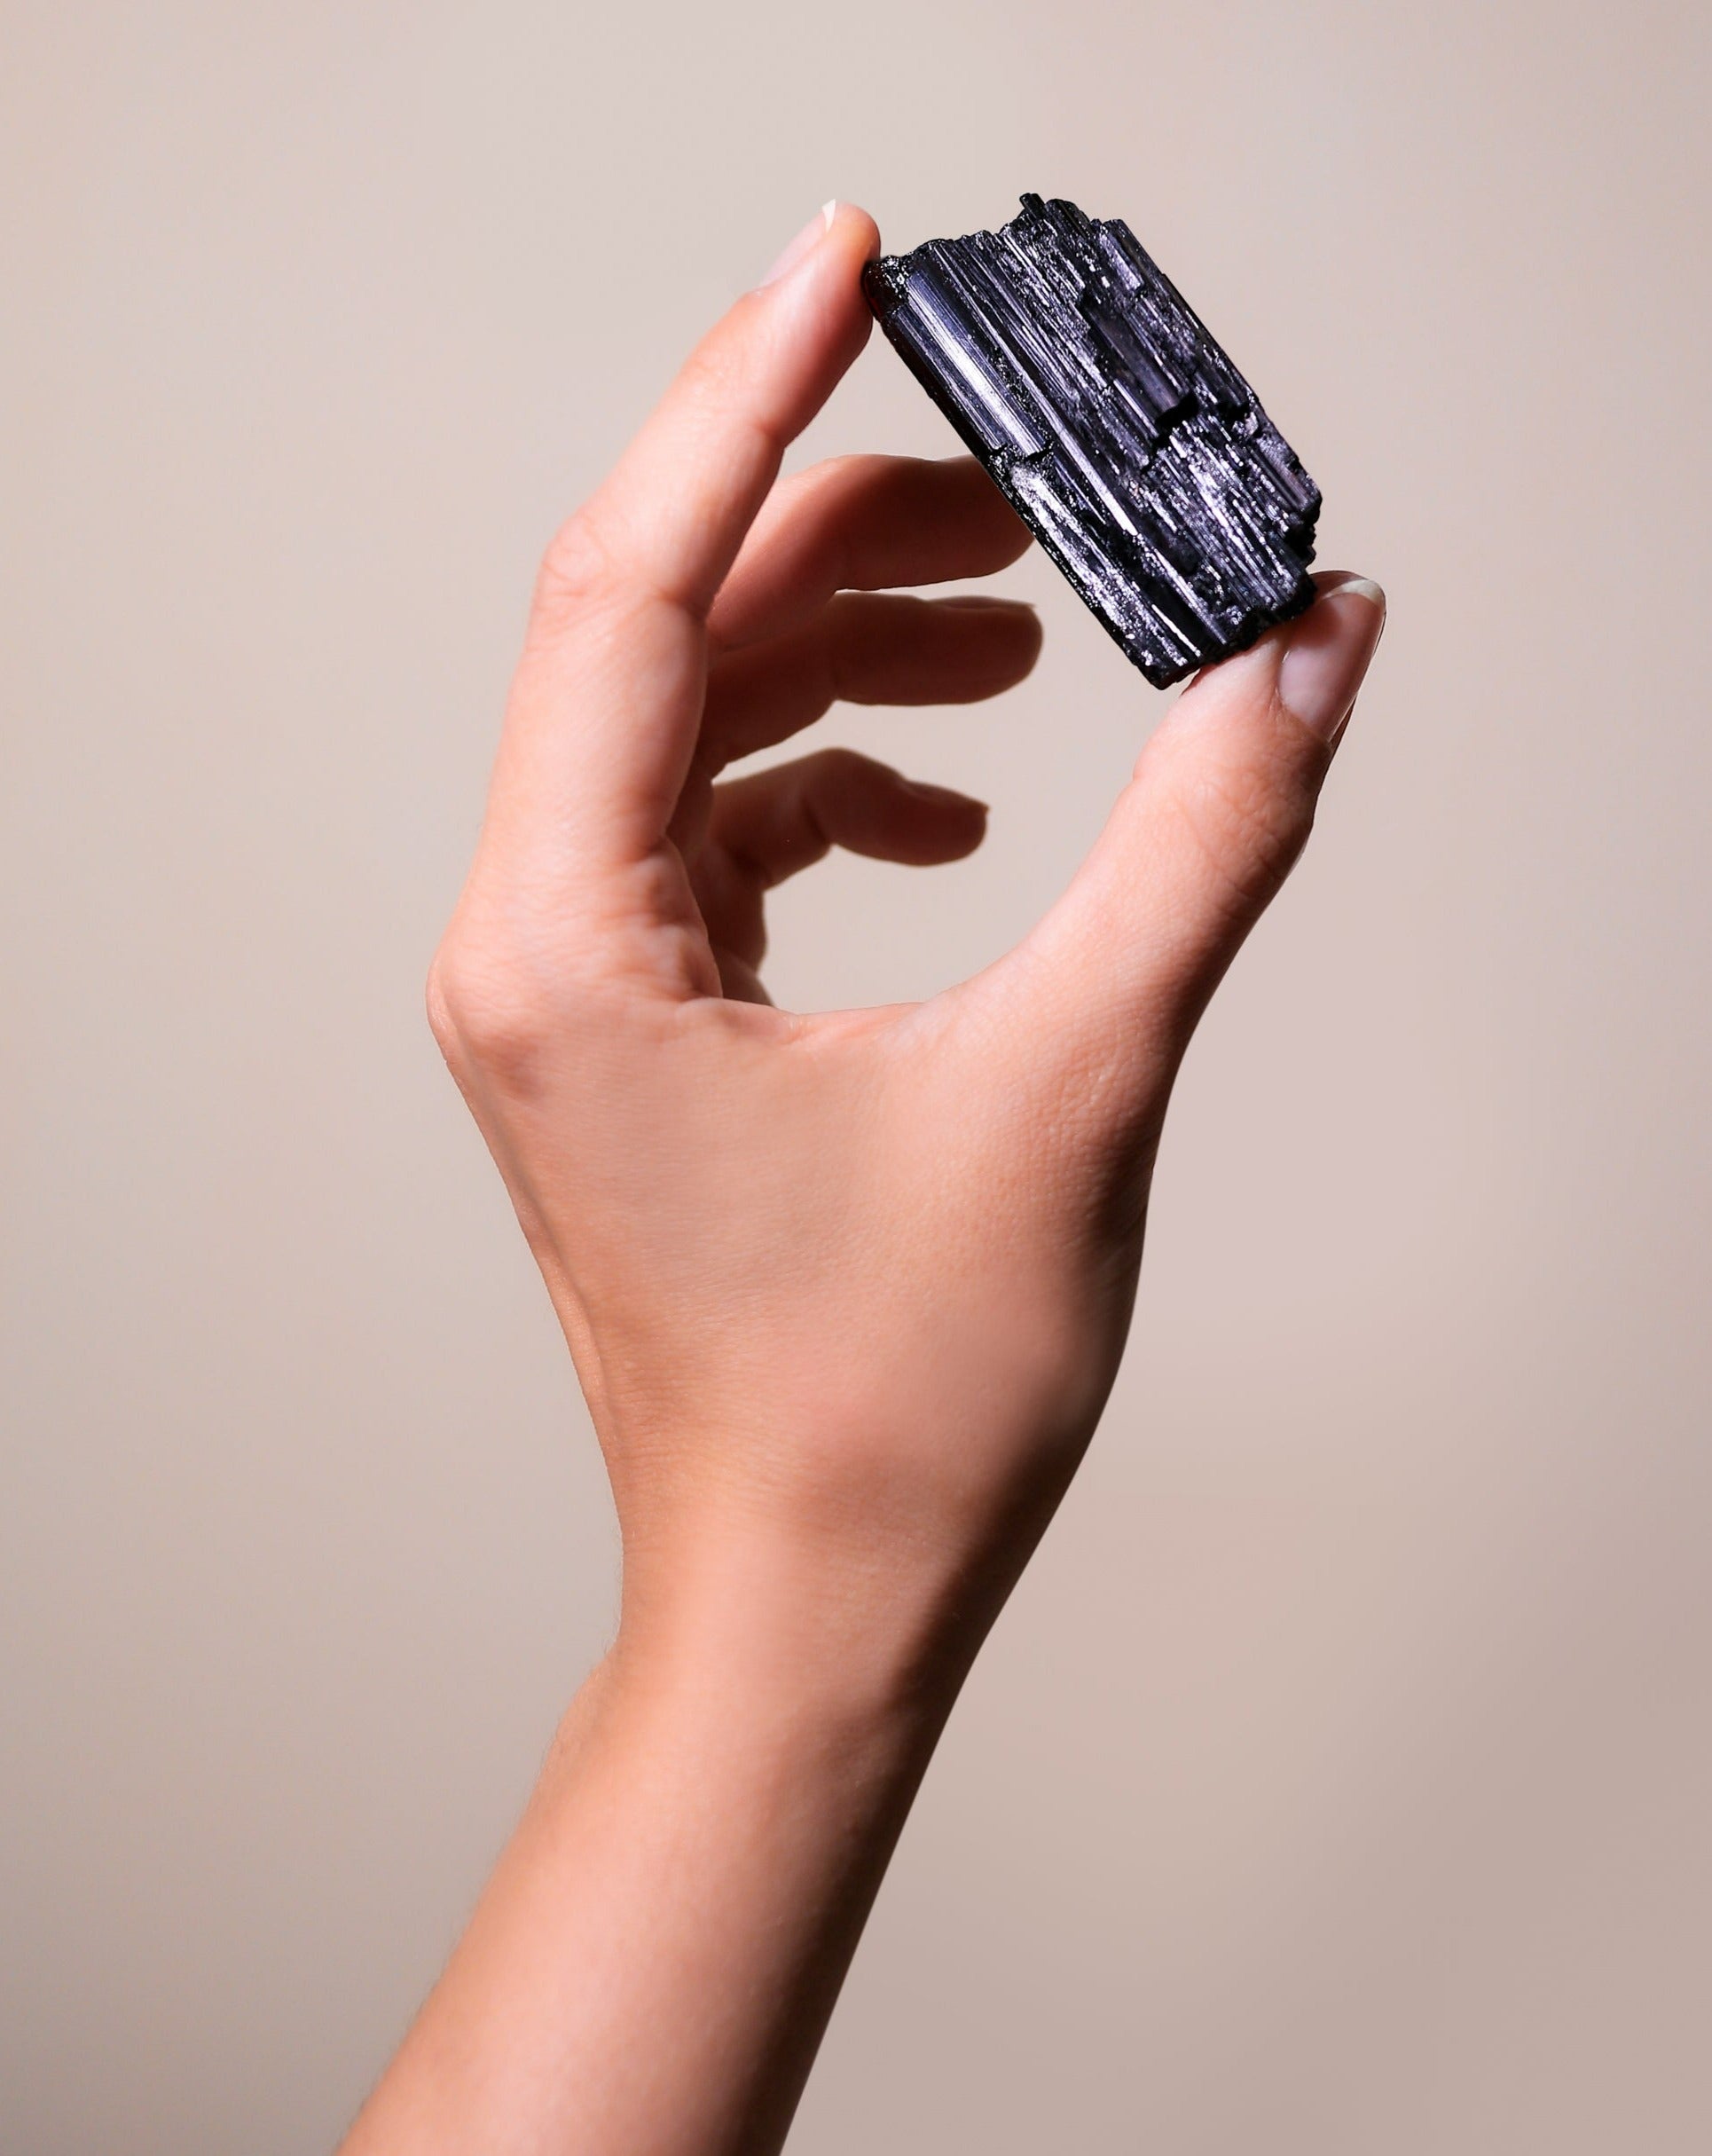 Black Tourmaline Crystal 